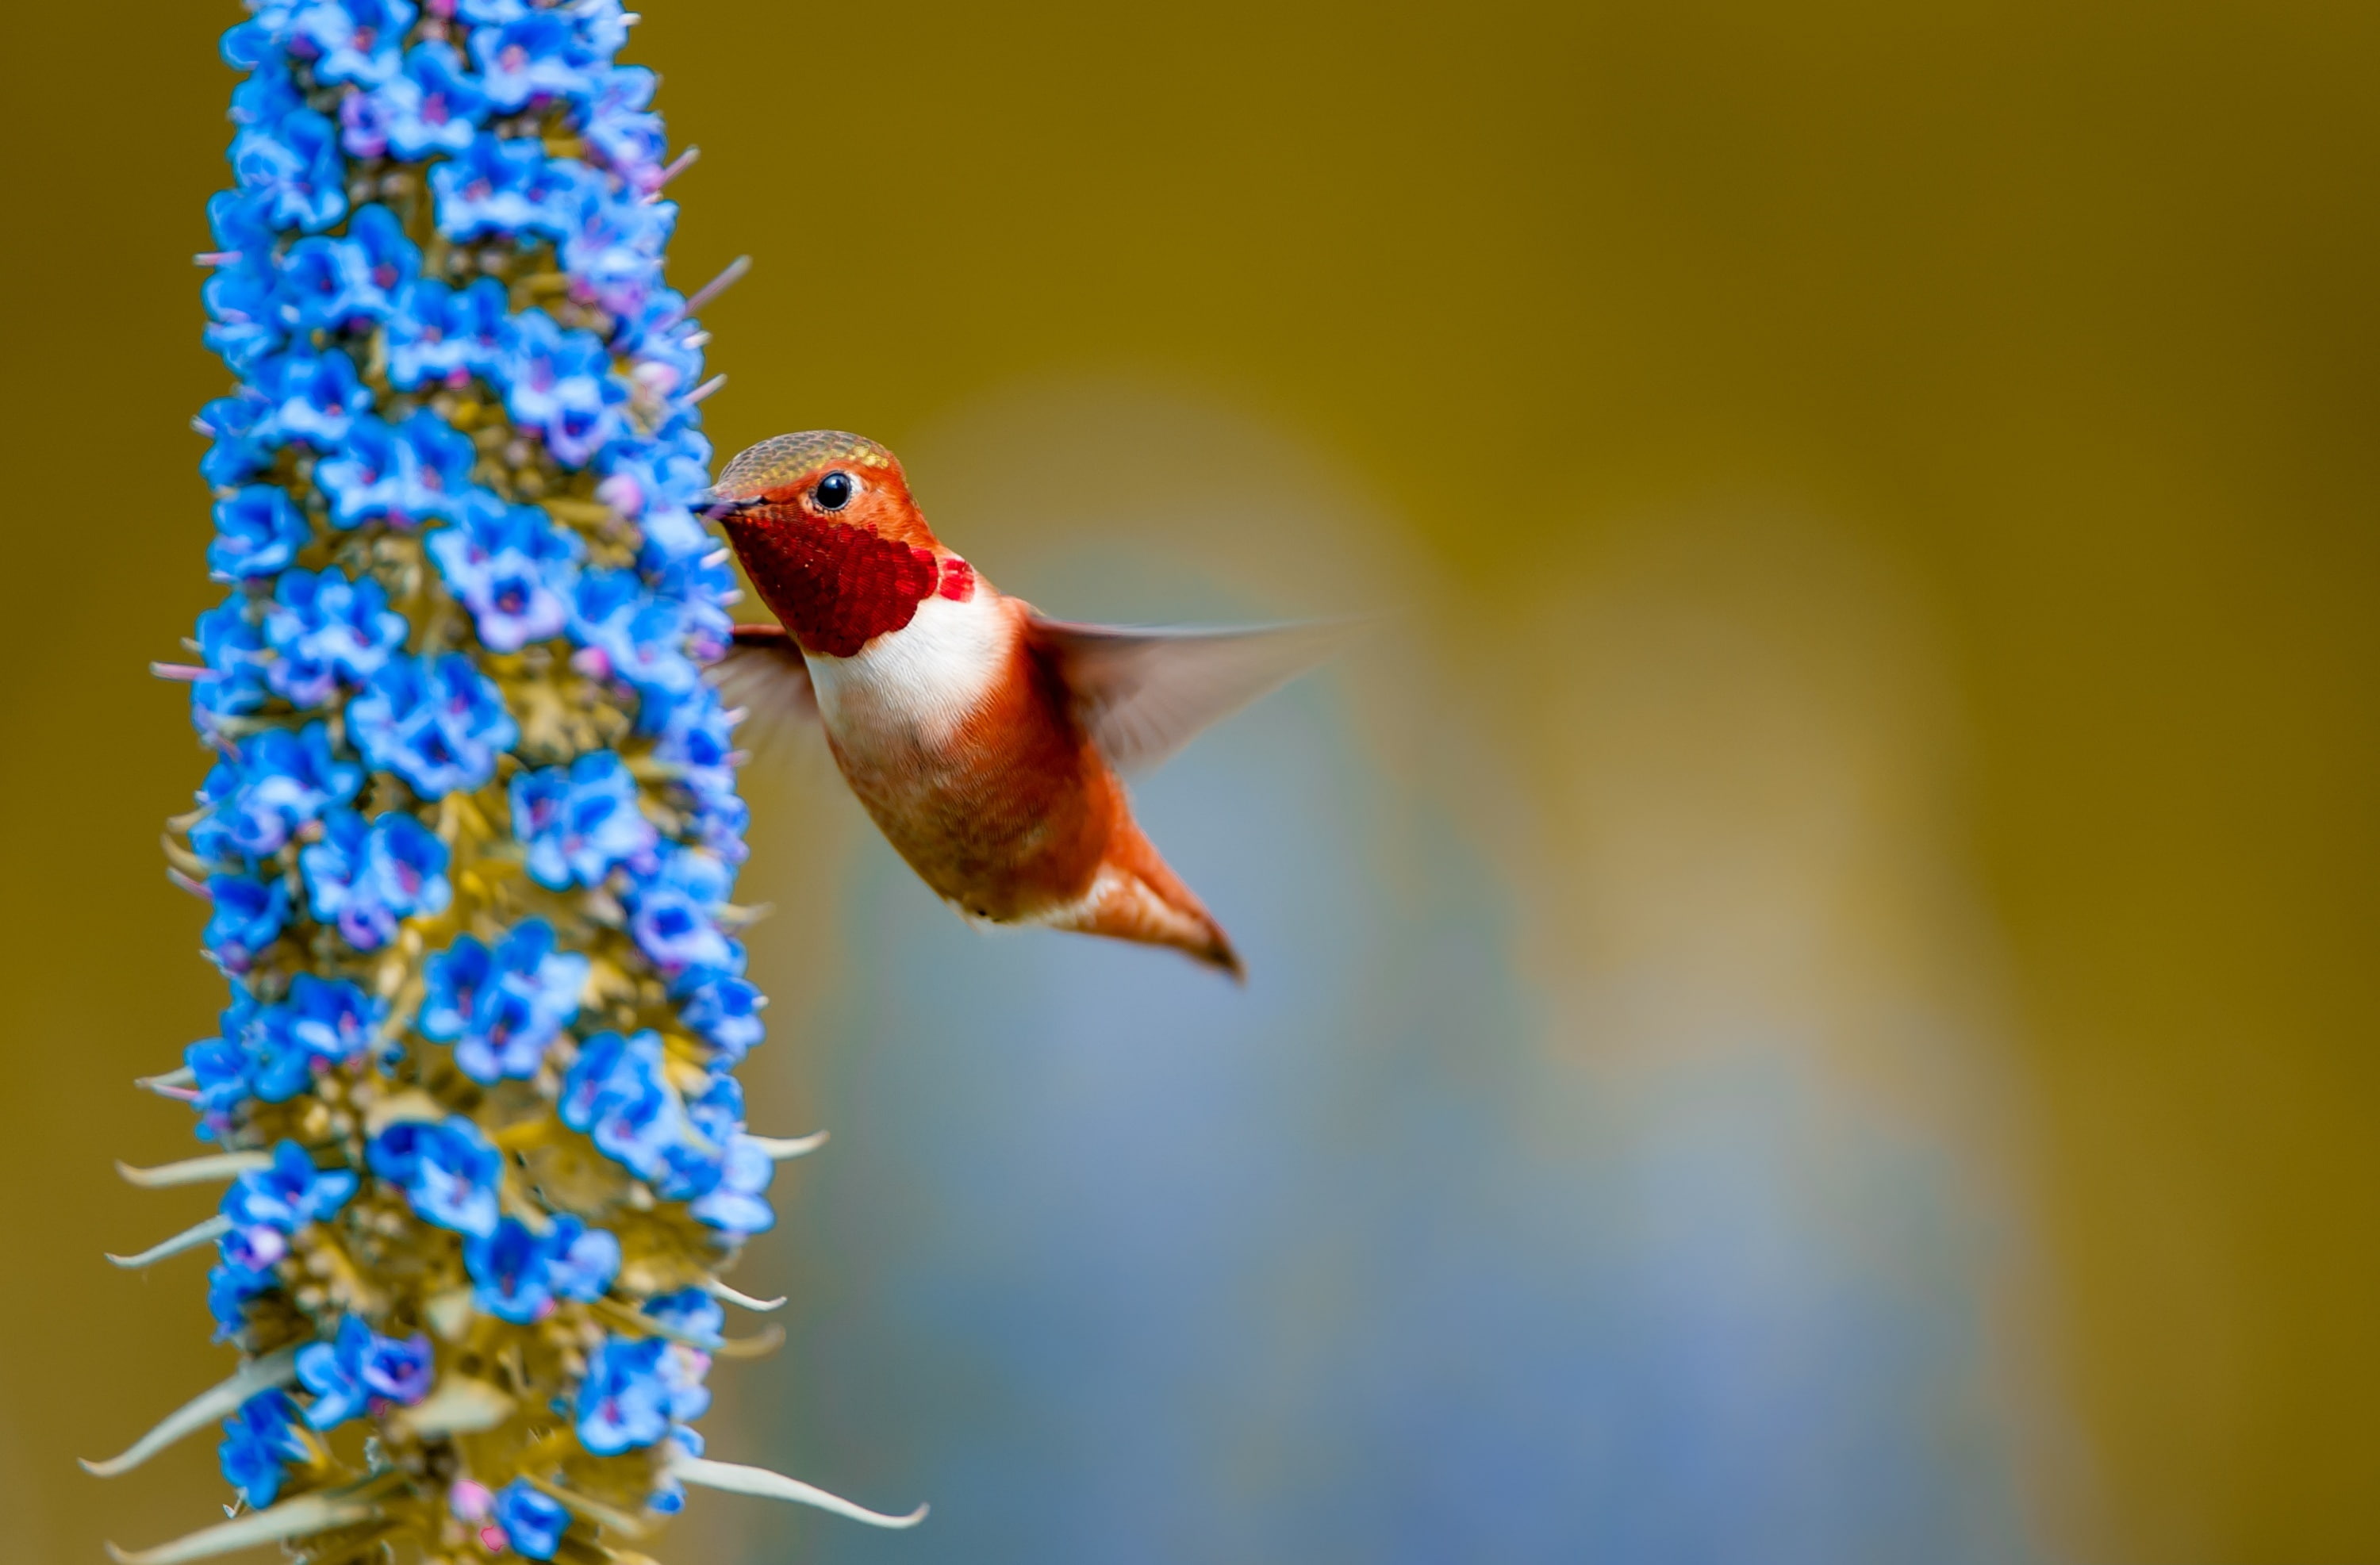 Rufous Hummingbird Feeding from a Flower, Animals, Birds, Orange